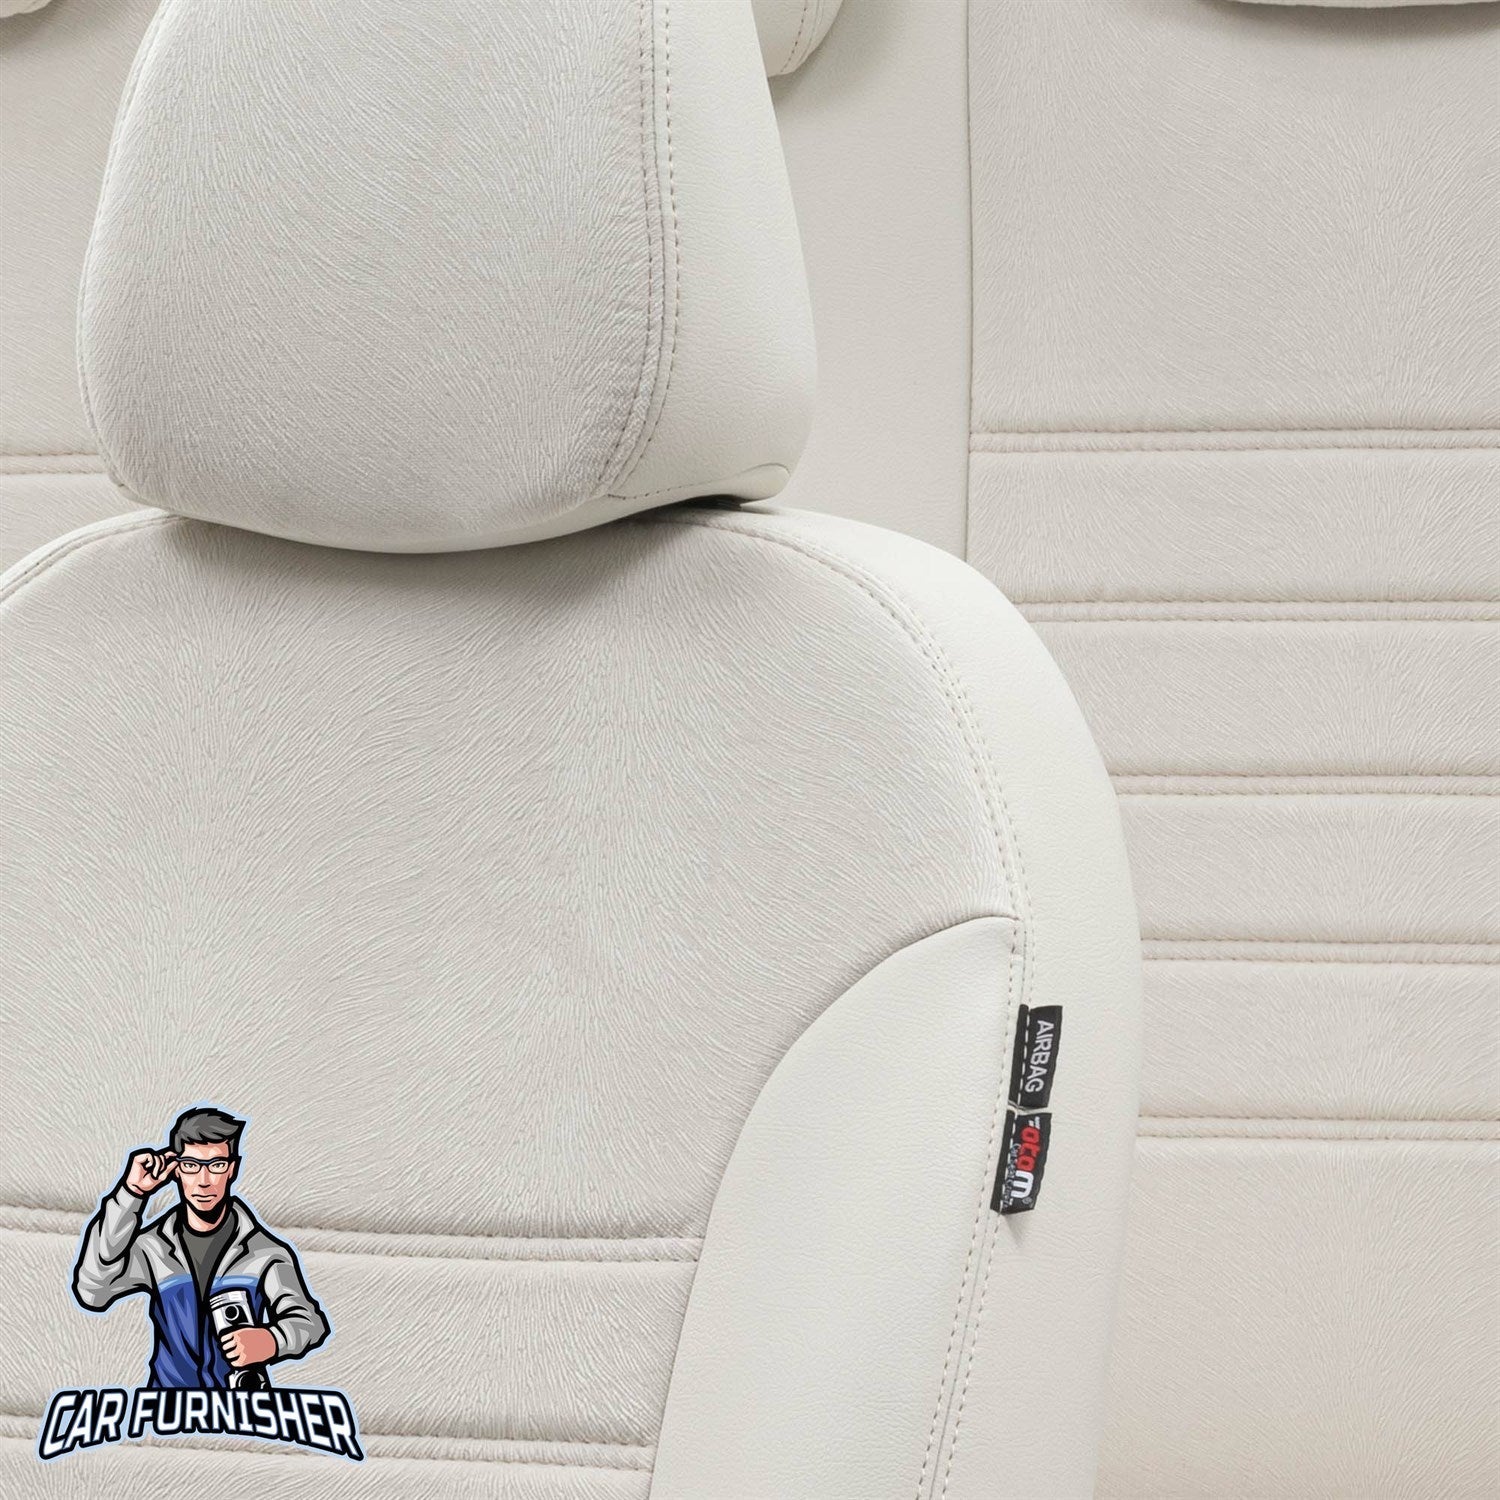 Suzuki Vitara Seat Covers London Foal Feather Design Ivory Leather & Foal Feather